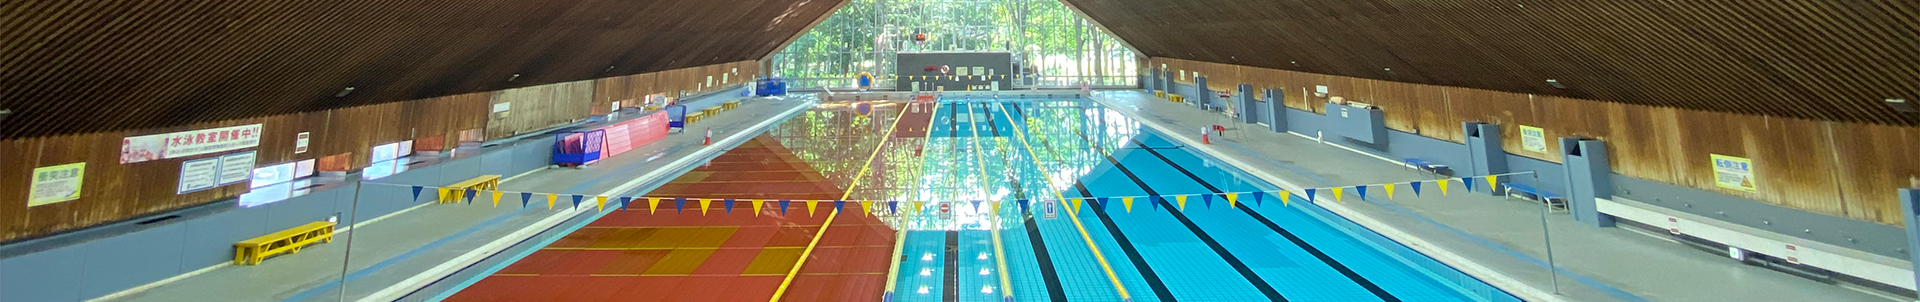 夏の短期水泳教室